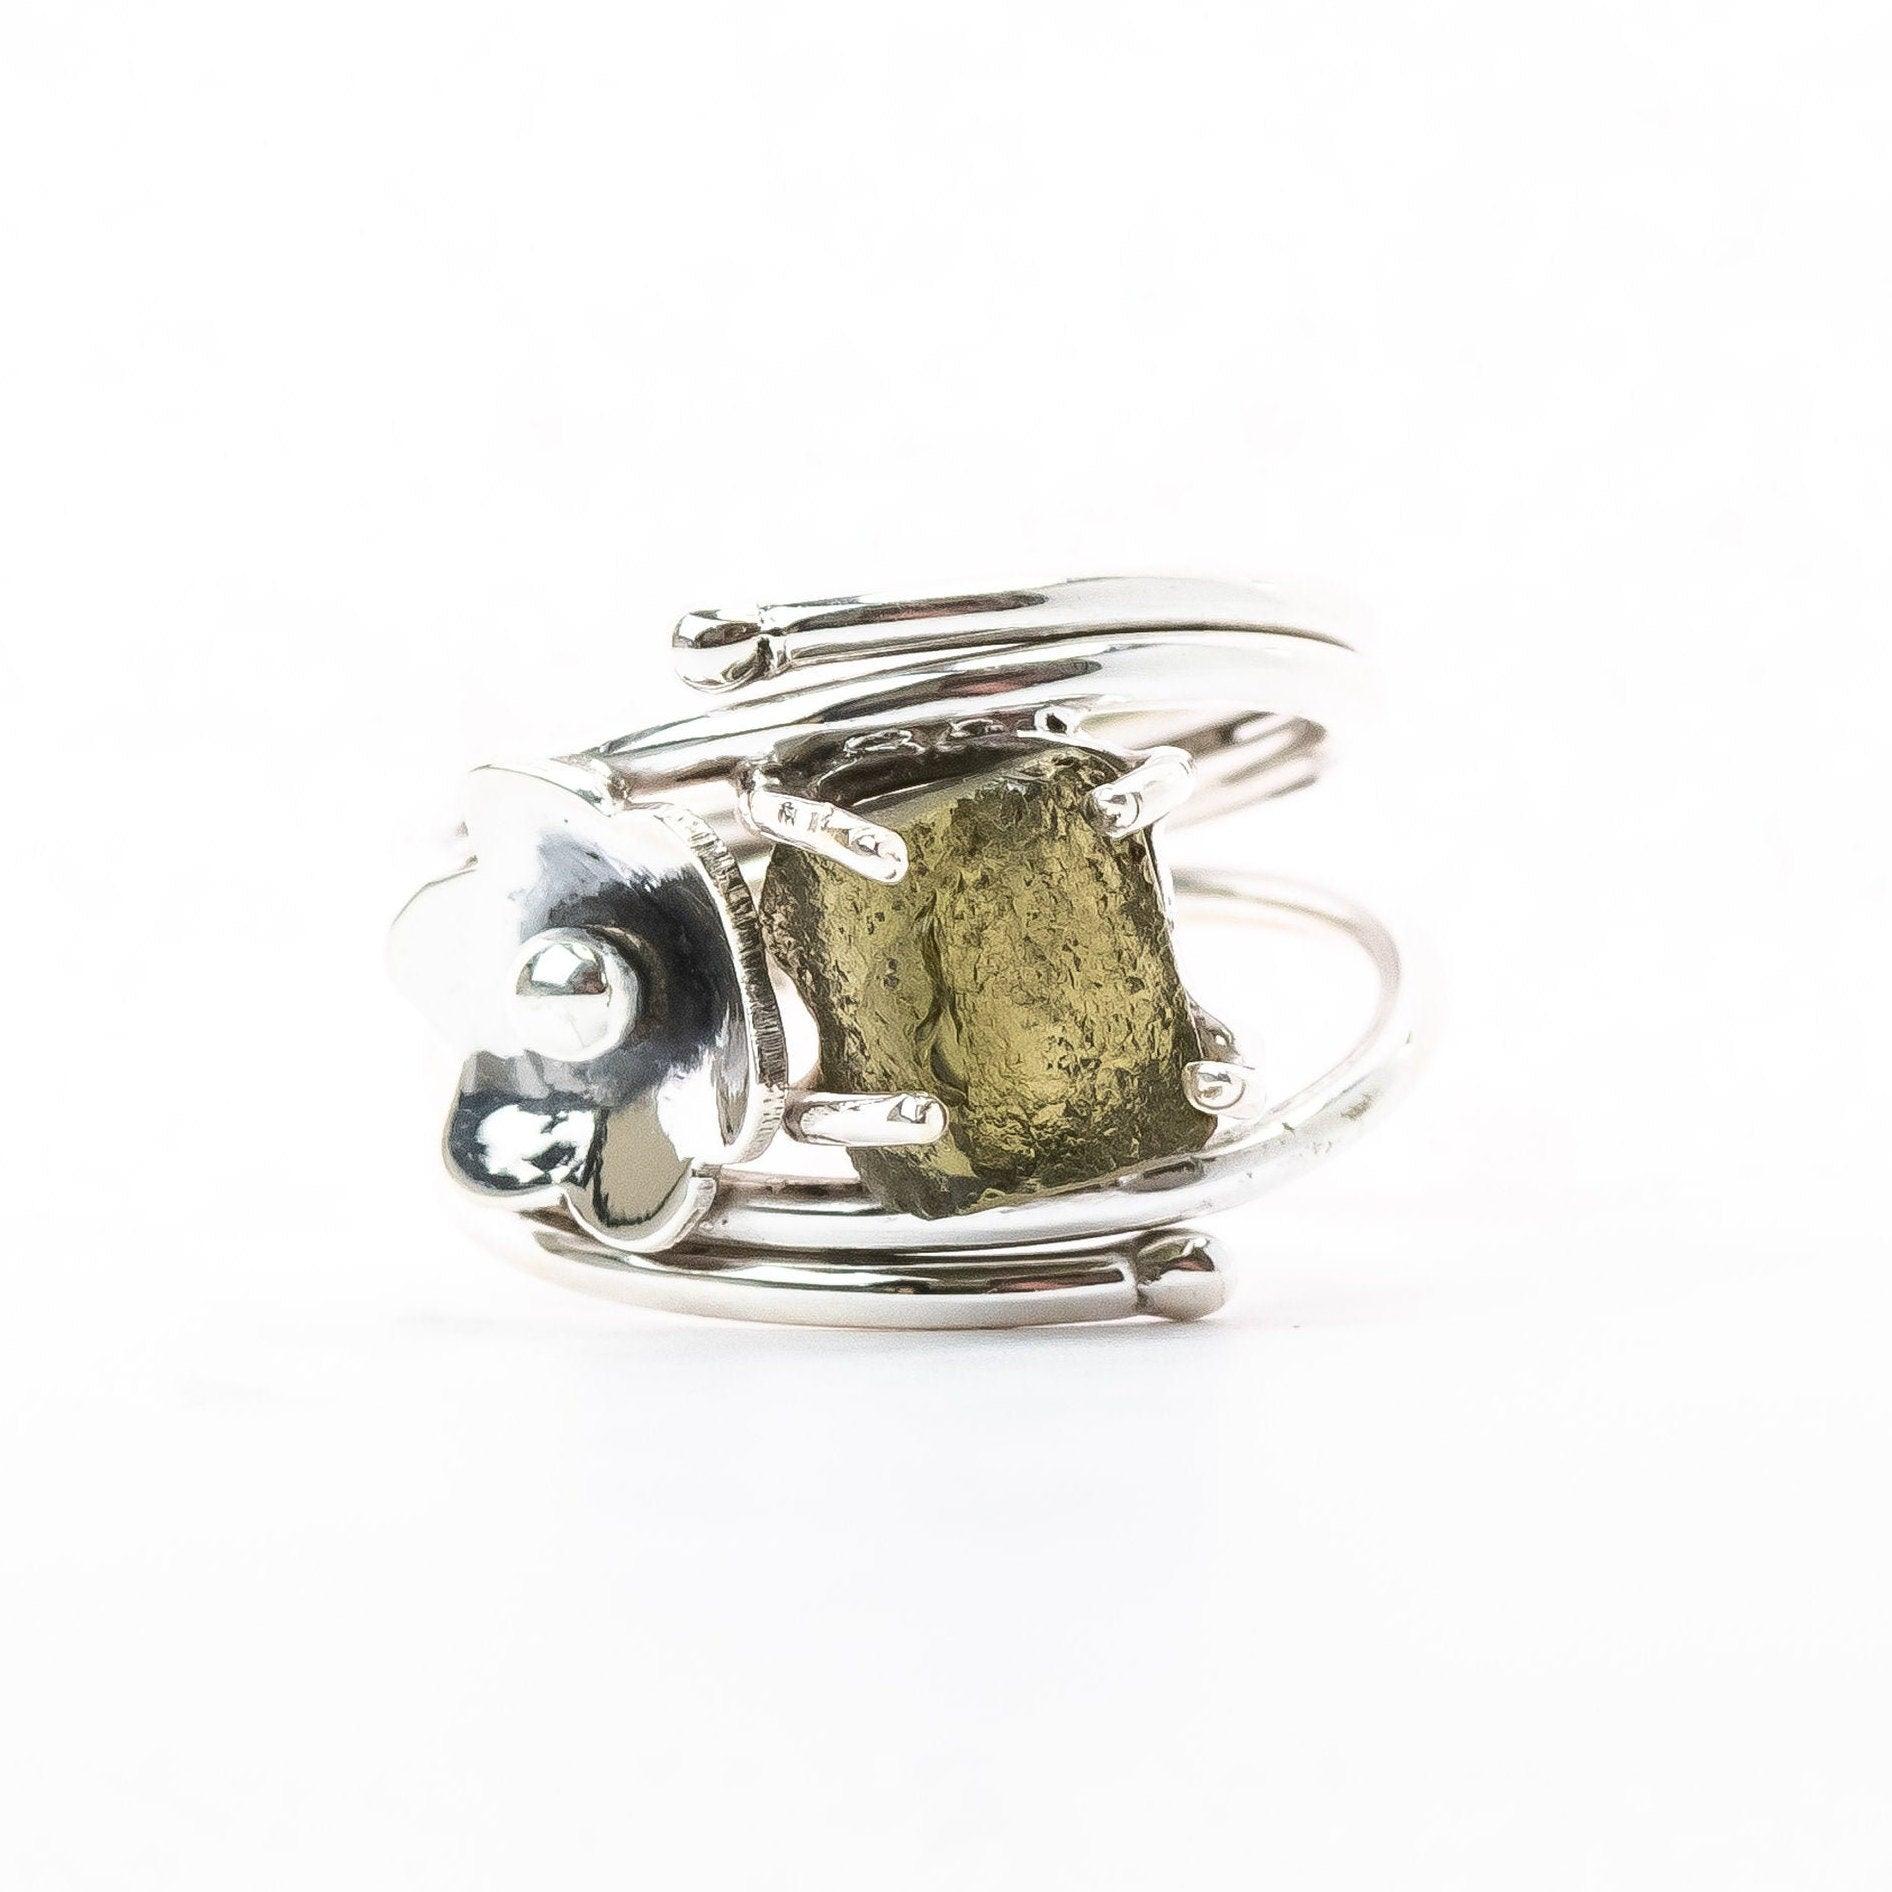 Moldavite Rough Ring From Czech Republic 100% Natural Gemstone 925 Solid Sterling Silver Handmade Designer Jewelry - Silverhubjewels